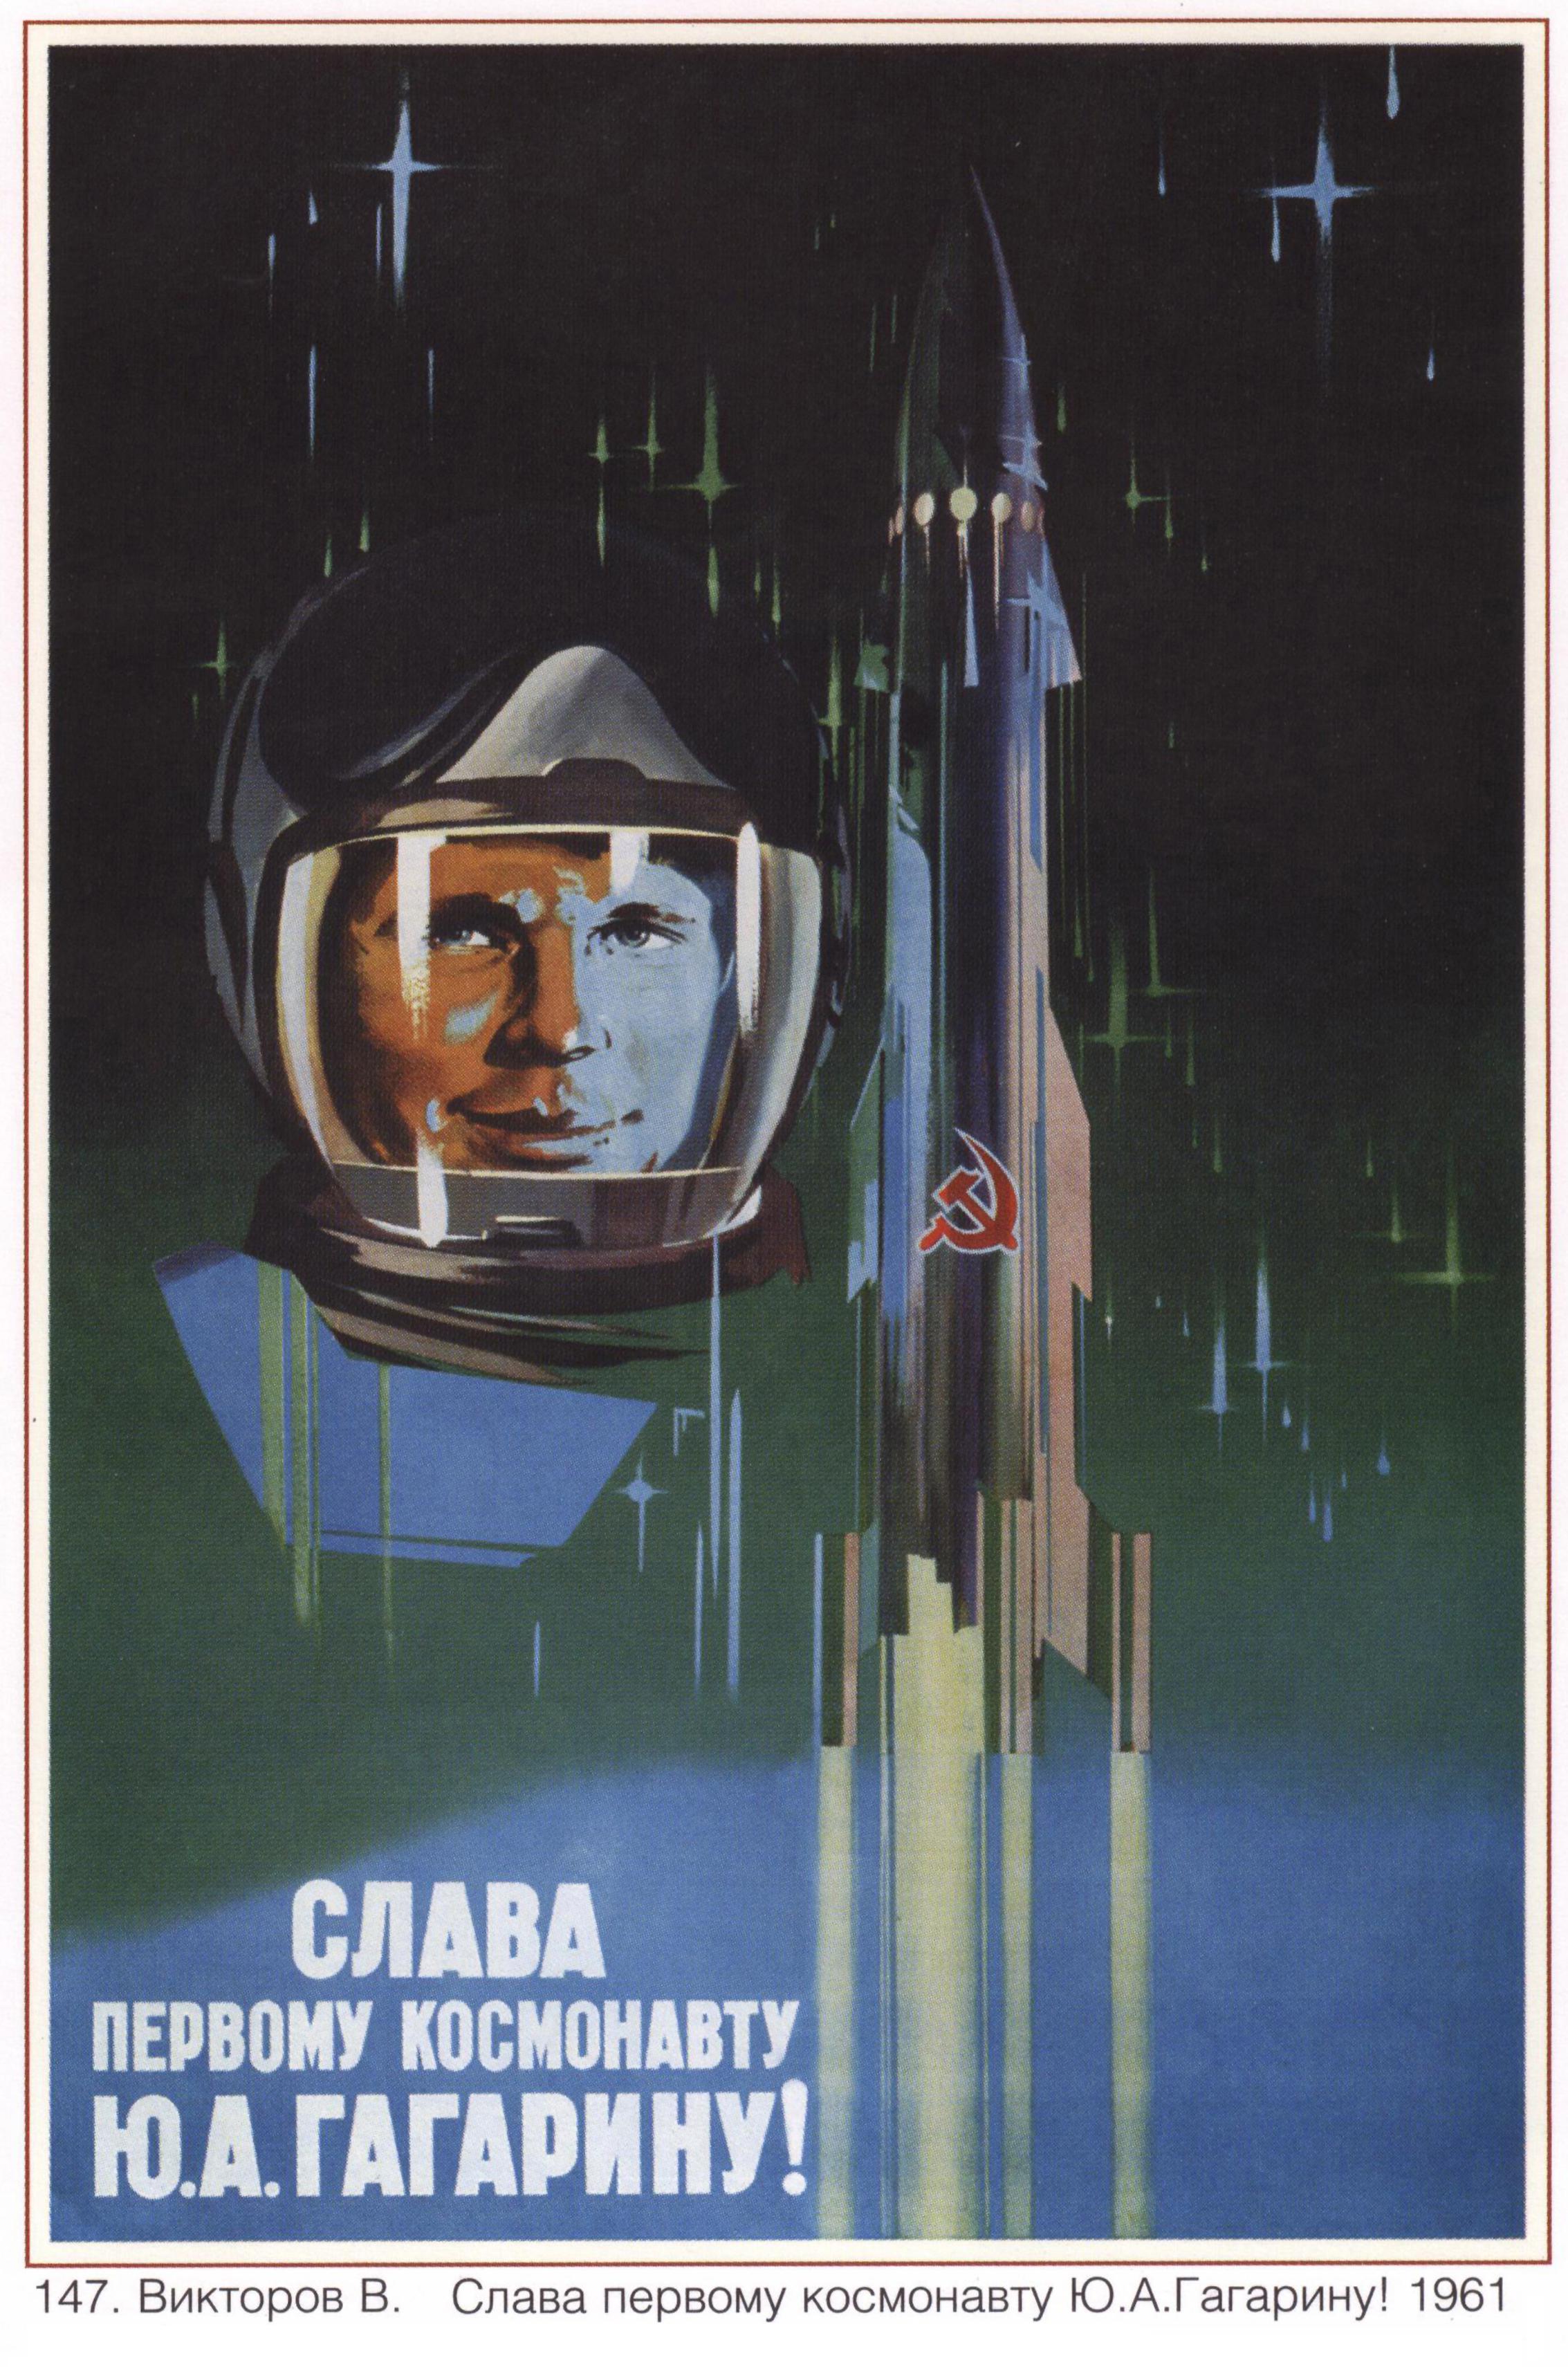 Gagarin Poster – Soviet Union – 1961